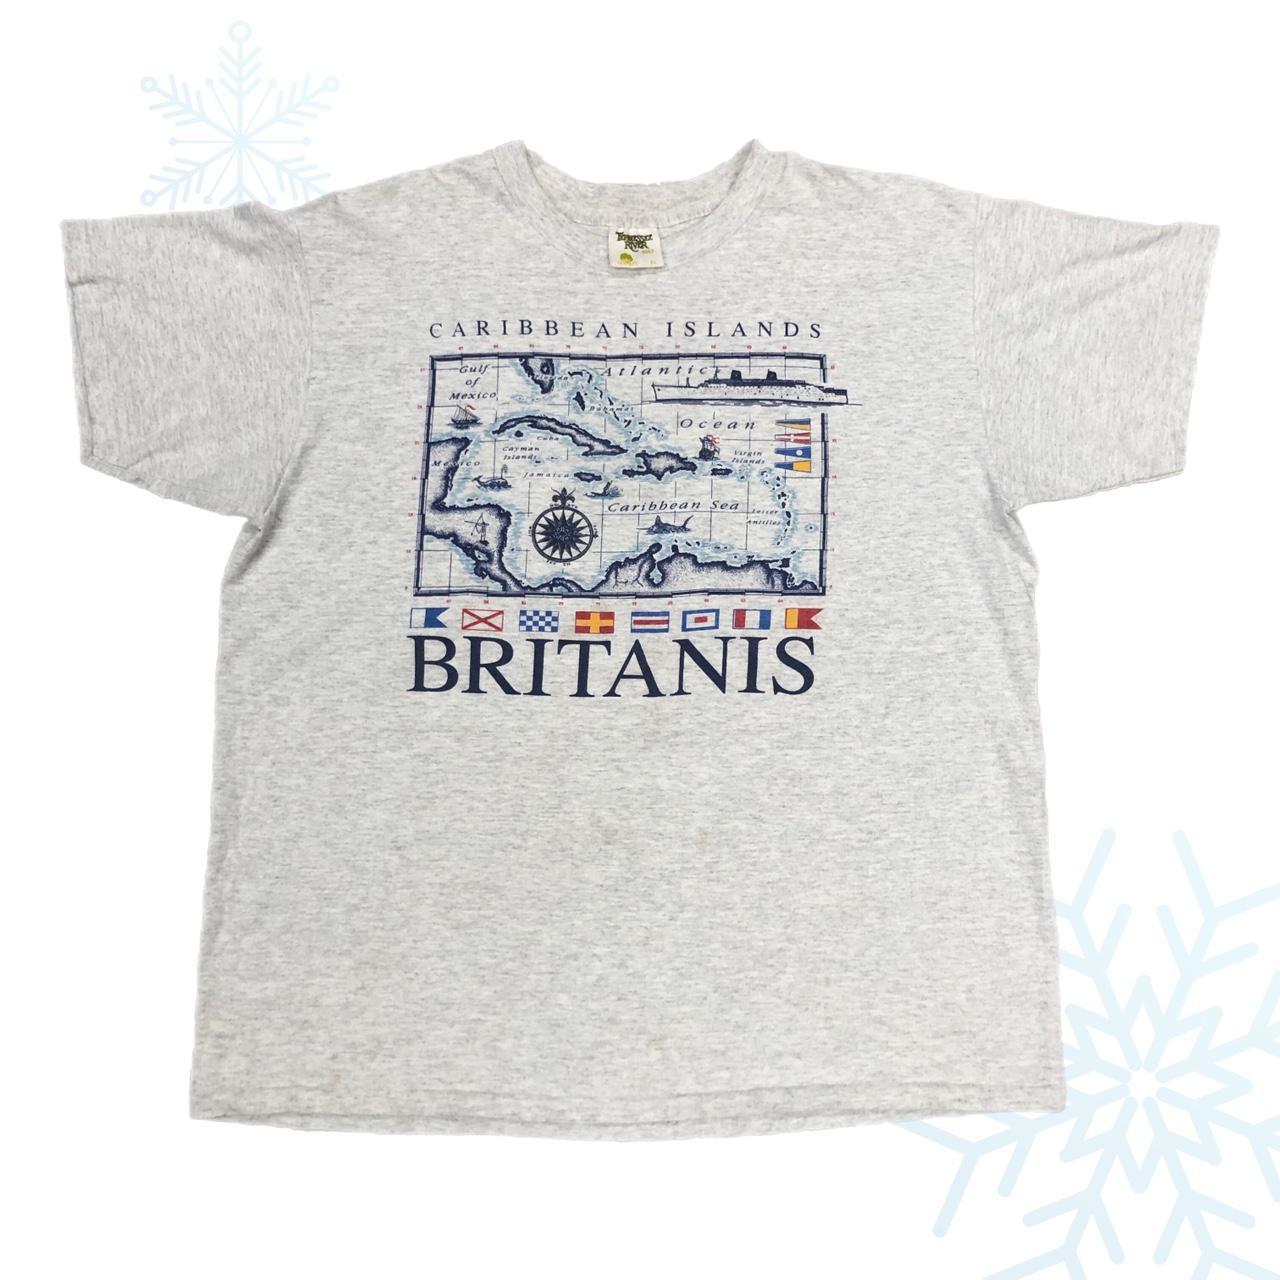 Vintage Caribbean Islands Britanis T-Shirt (XL)